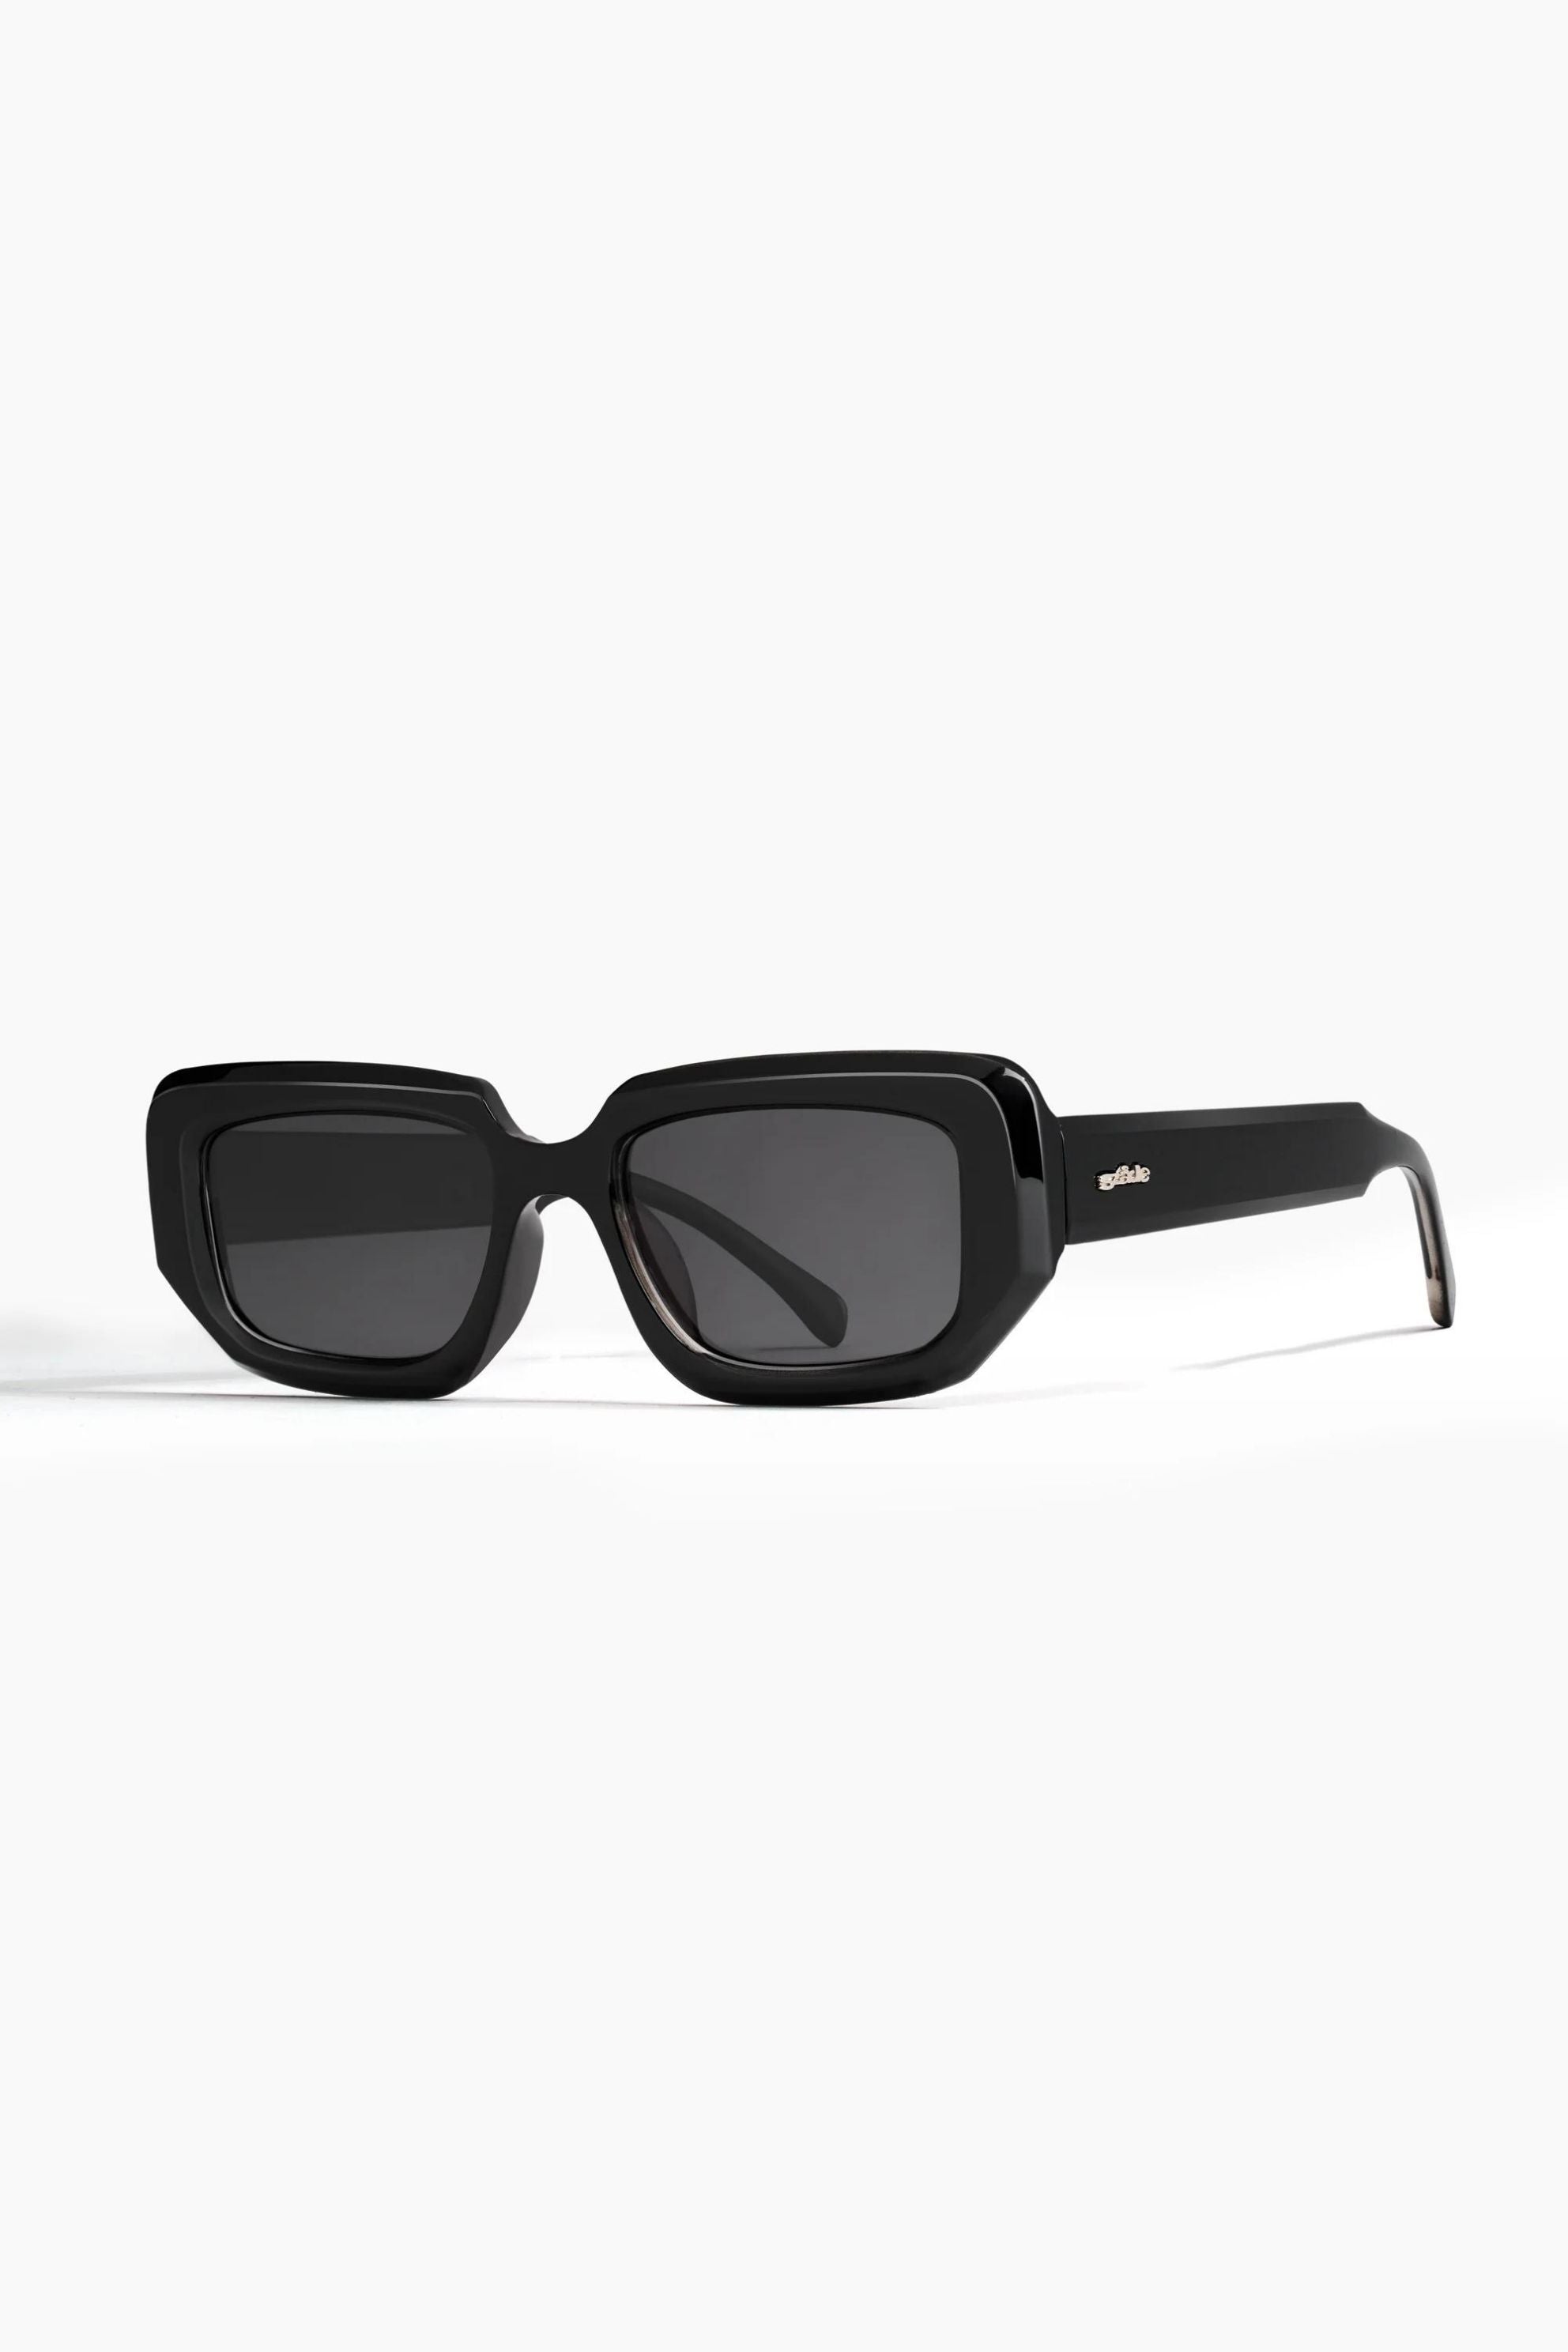 Banks Sunglasses Elysium Double Black